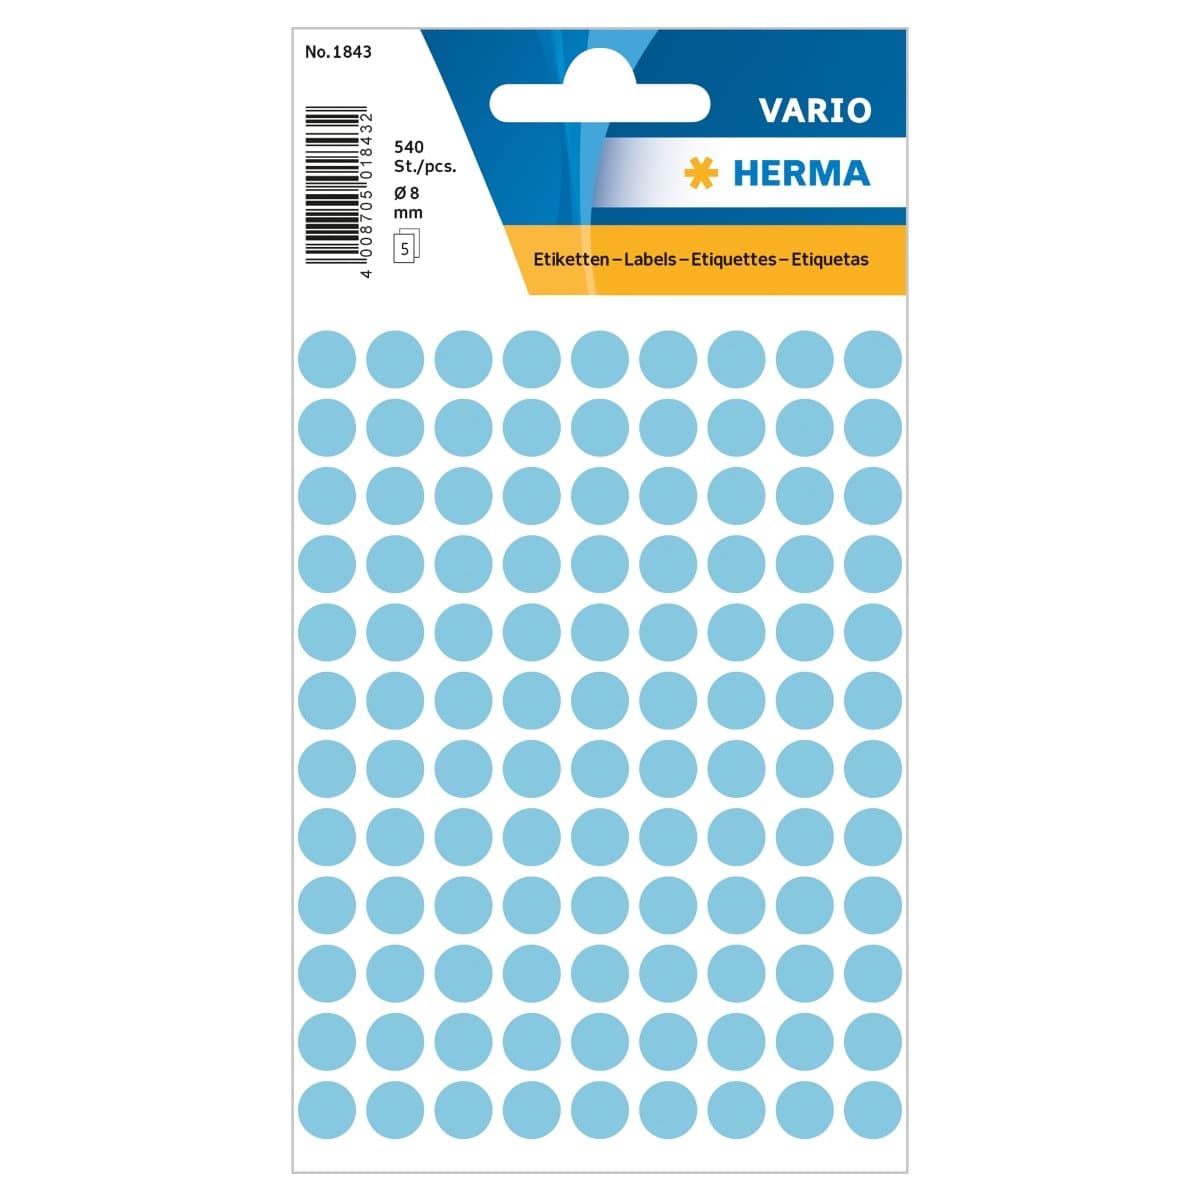 Herma Vario Sticker Color Dots, 8 mm, 540/pack, Blue